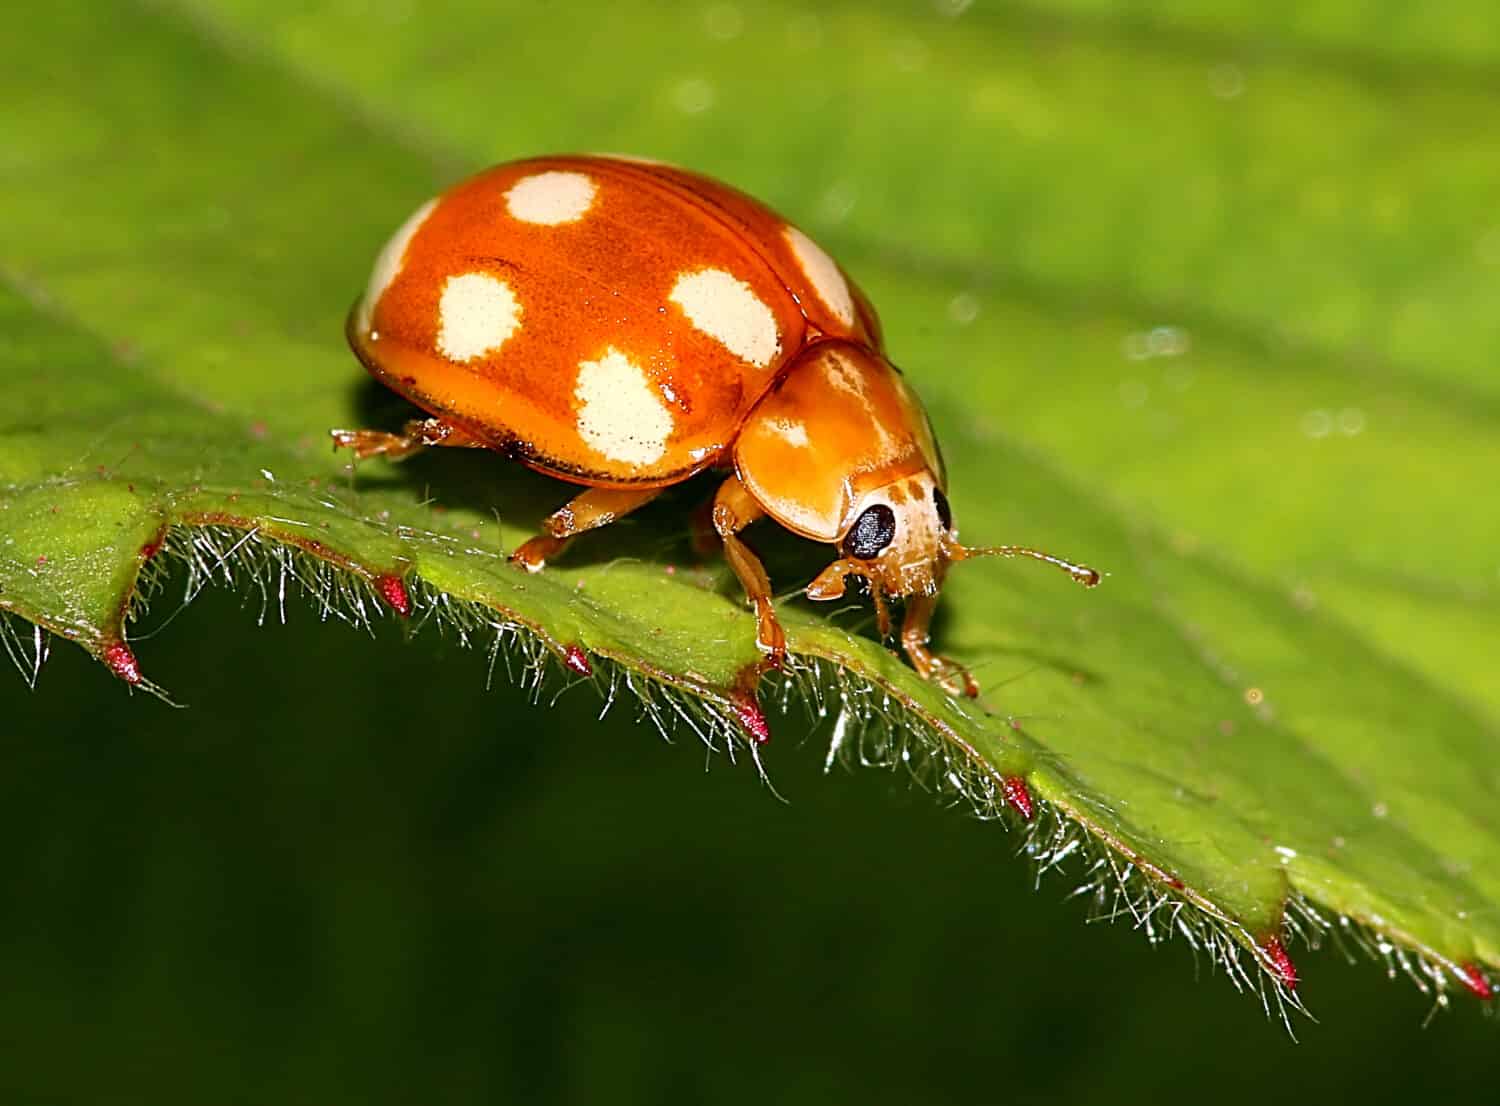 Close up of a European Ten spot ladybird (Calvia decemguttata), a.k.a. 10-spotted ladybug.